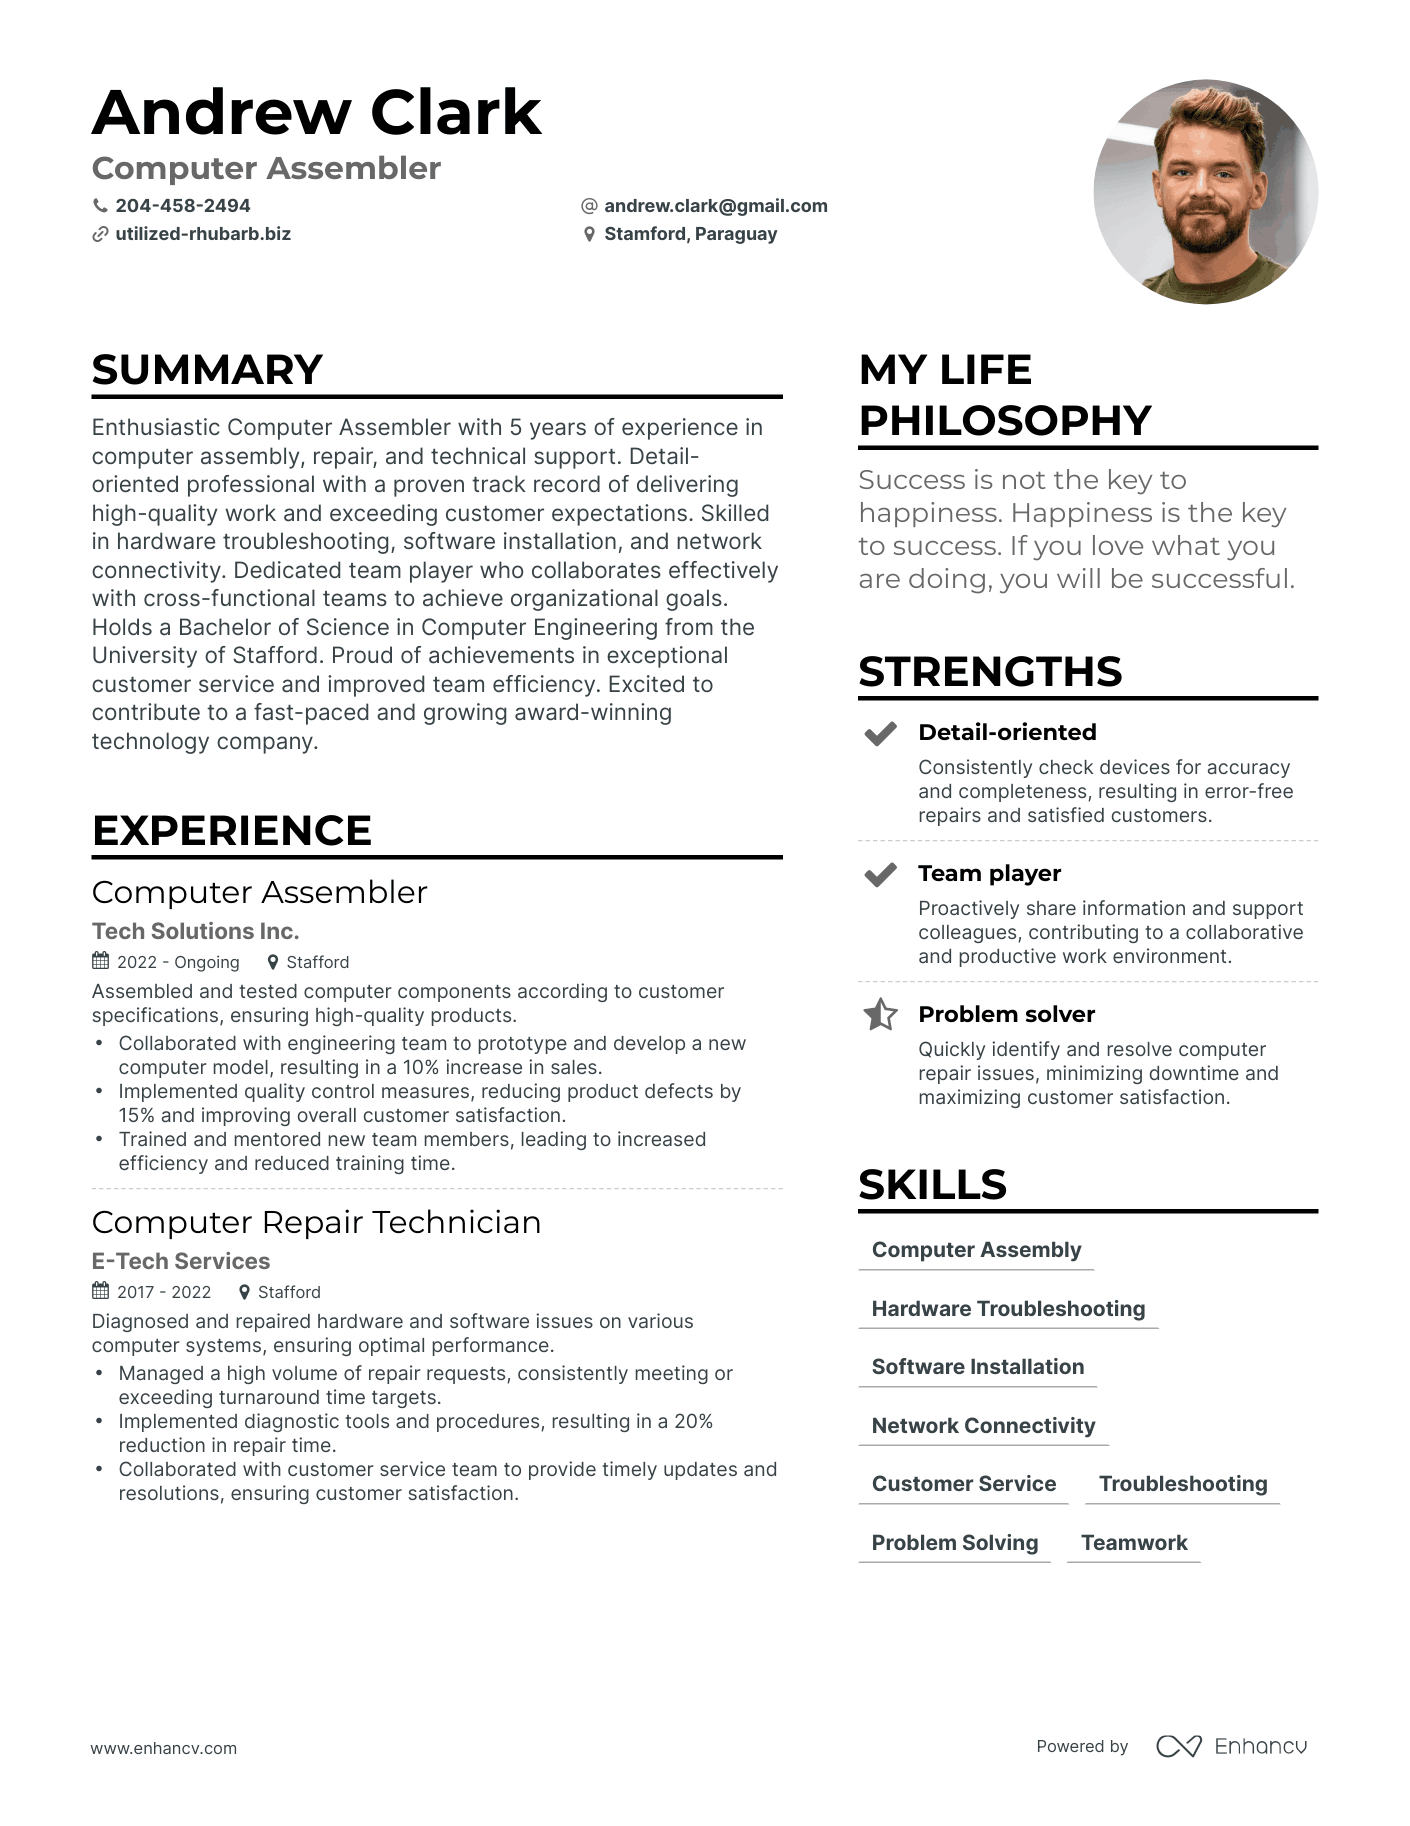 Computer Assembler resume example